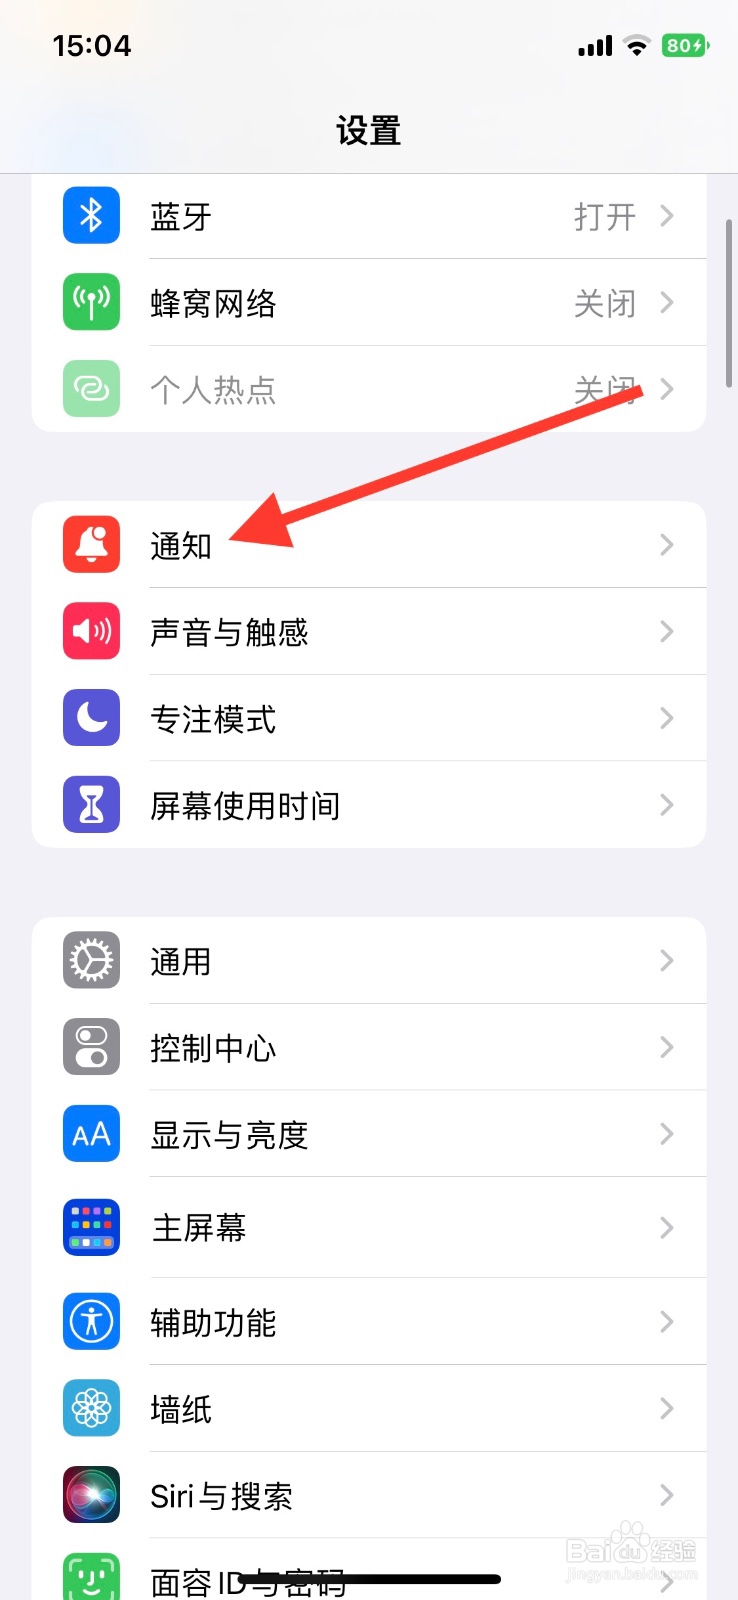 <b>iPhone【岭南通】app开启通知声音提醒</b>